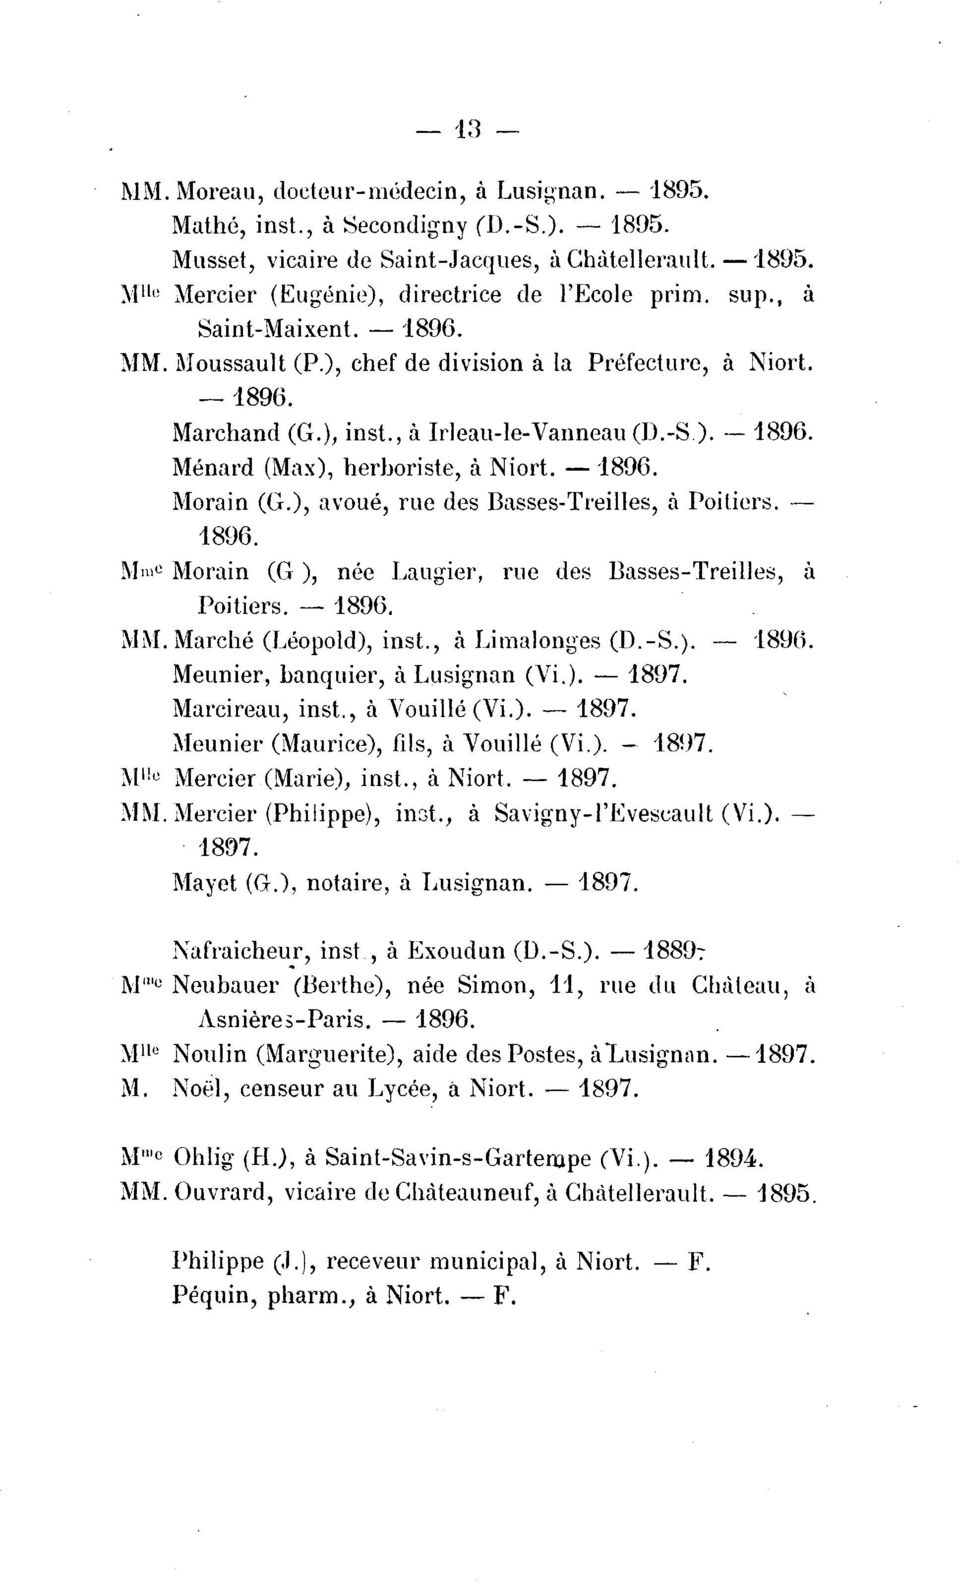 Menard (Max), herboriste, a Niort. - -1896. Morain (G.), avoue, rue des Dasses-Treilles, a Poilicrs. - 1896. l\fmc Morain (G), nee Laugier, rue des Dasses-Treilles, a Poitiers. - 1896. MM.